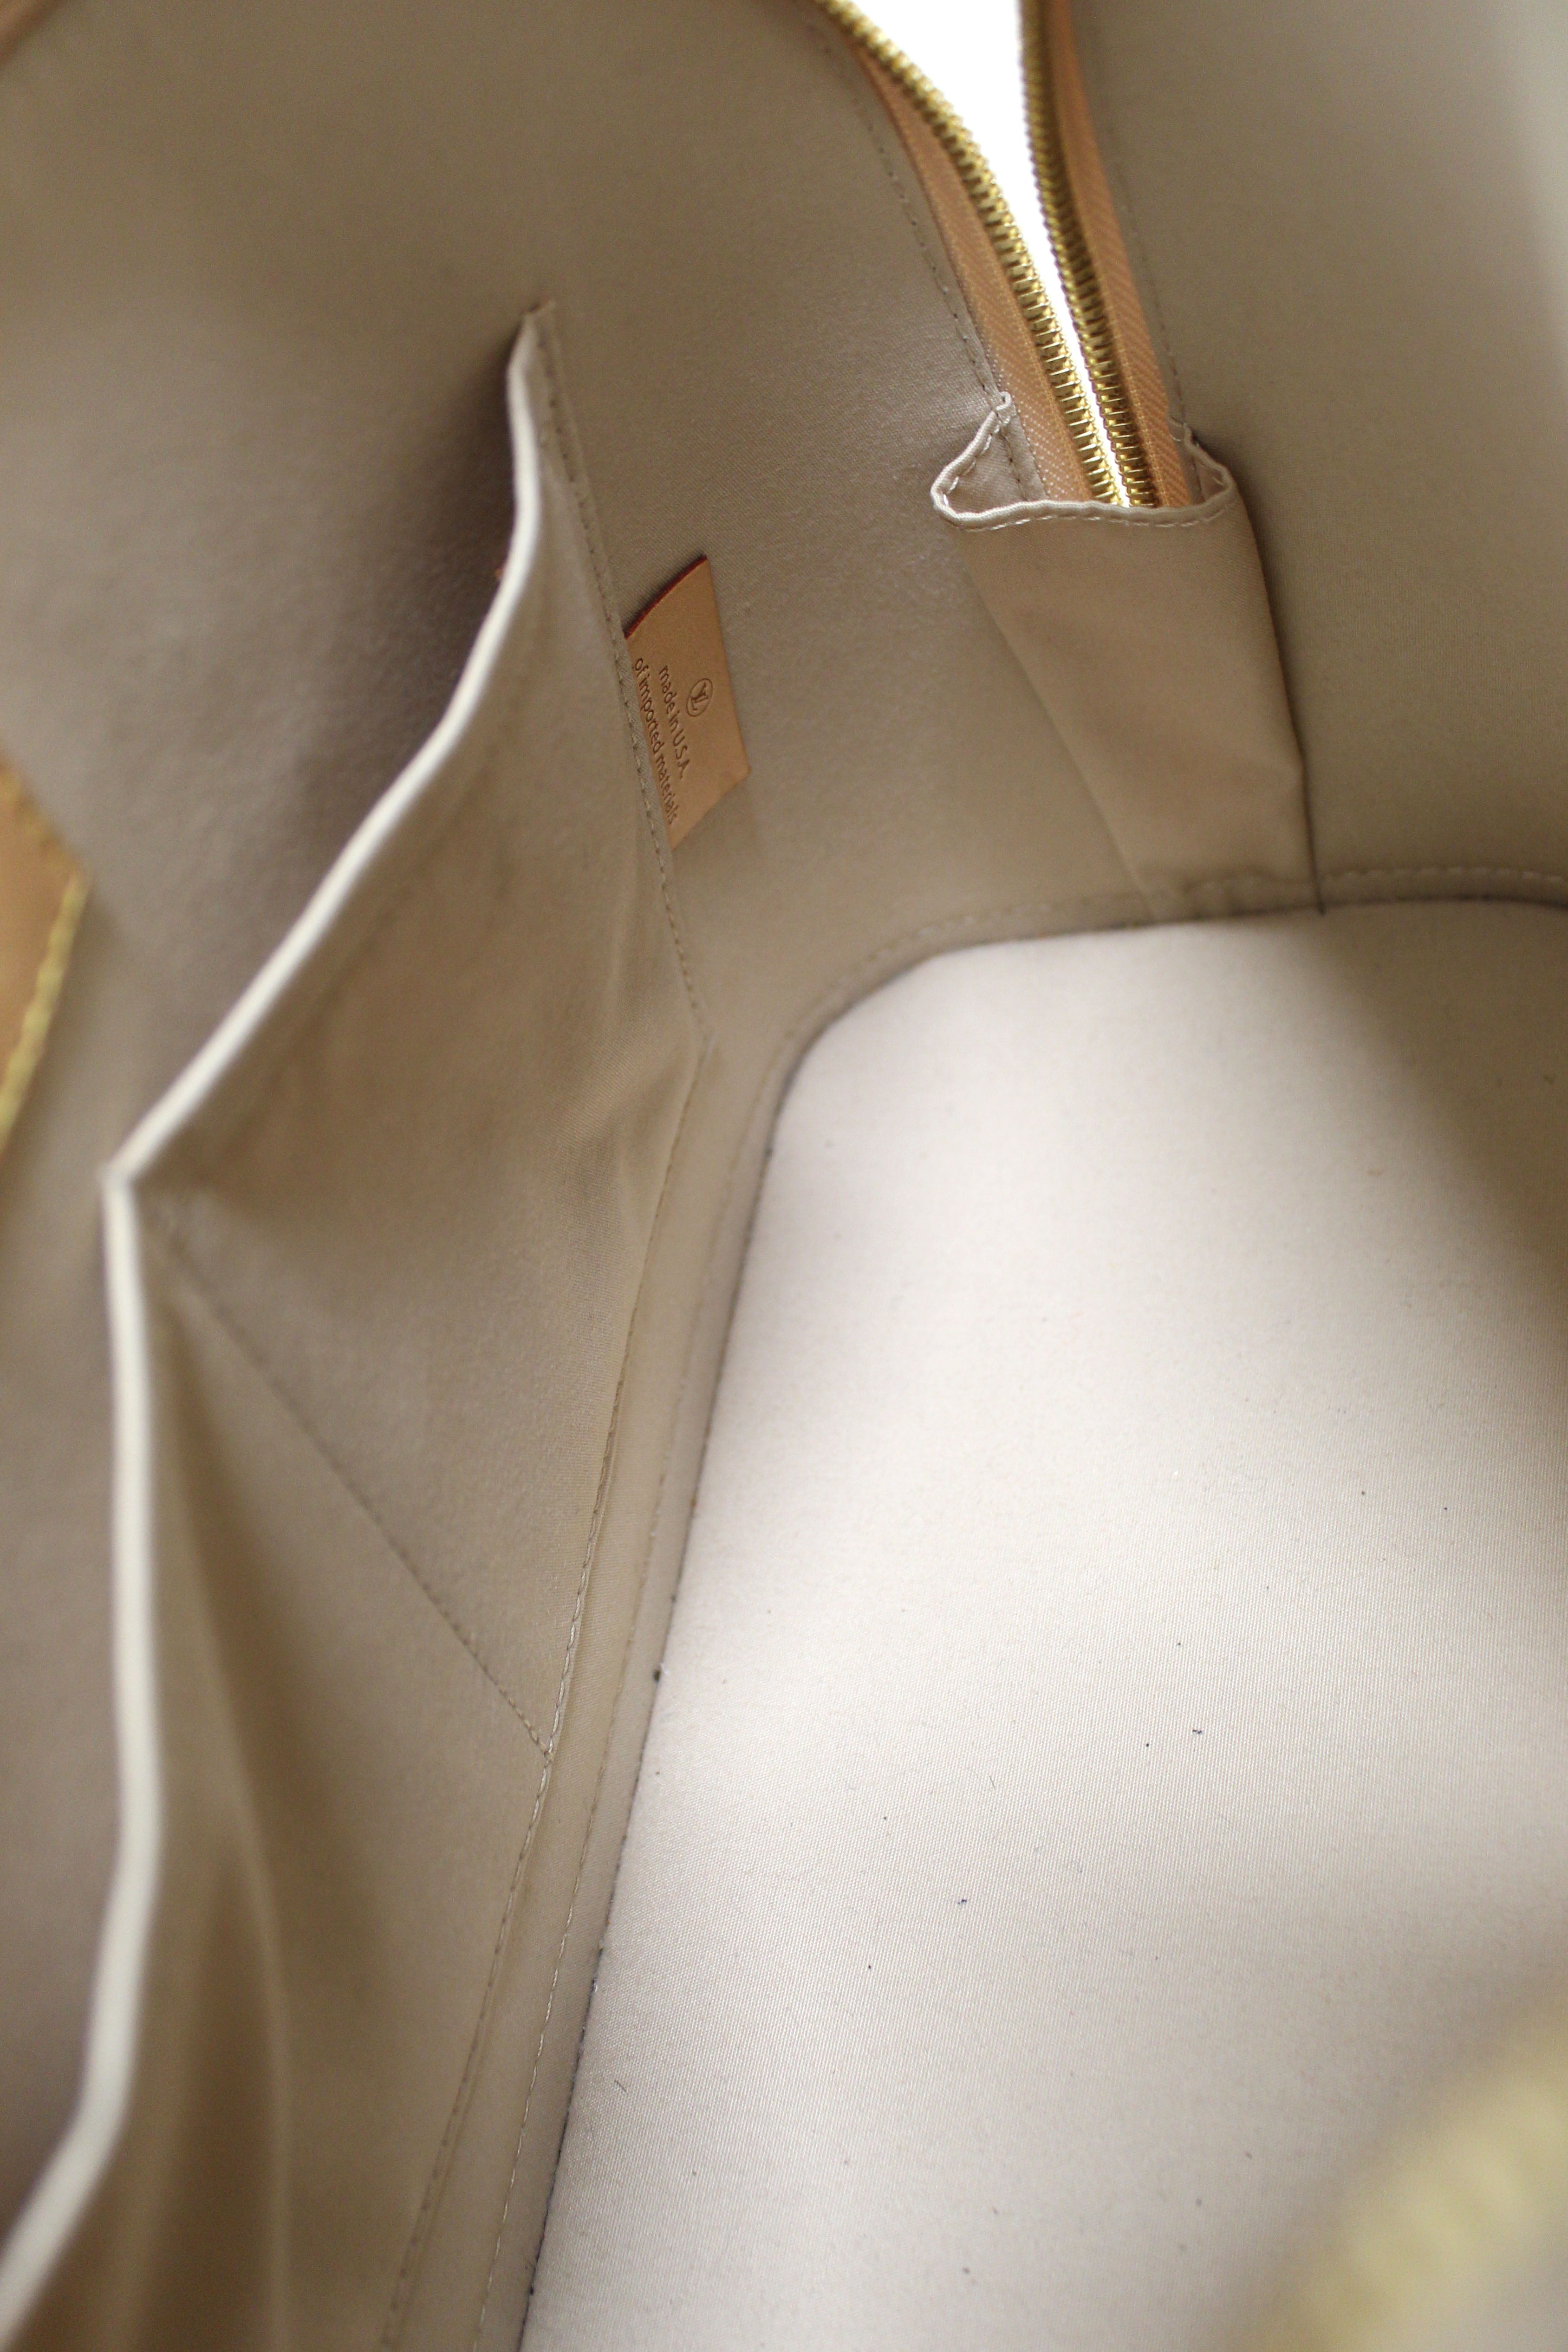 Authentic Louis Vuitton Yellow Monogram Vernis Leather Alma PM Handbag